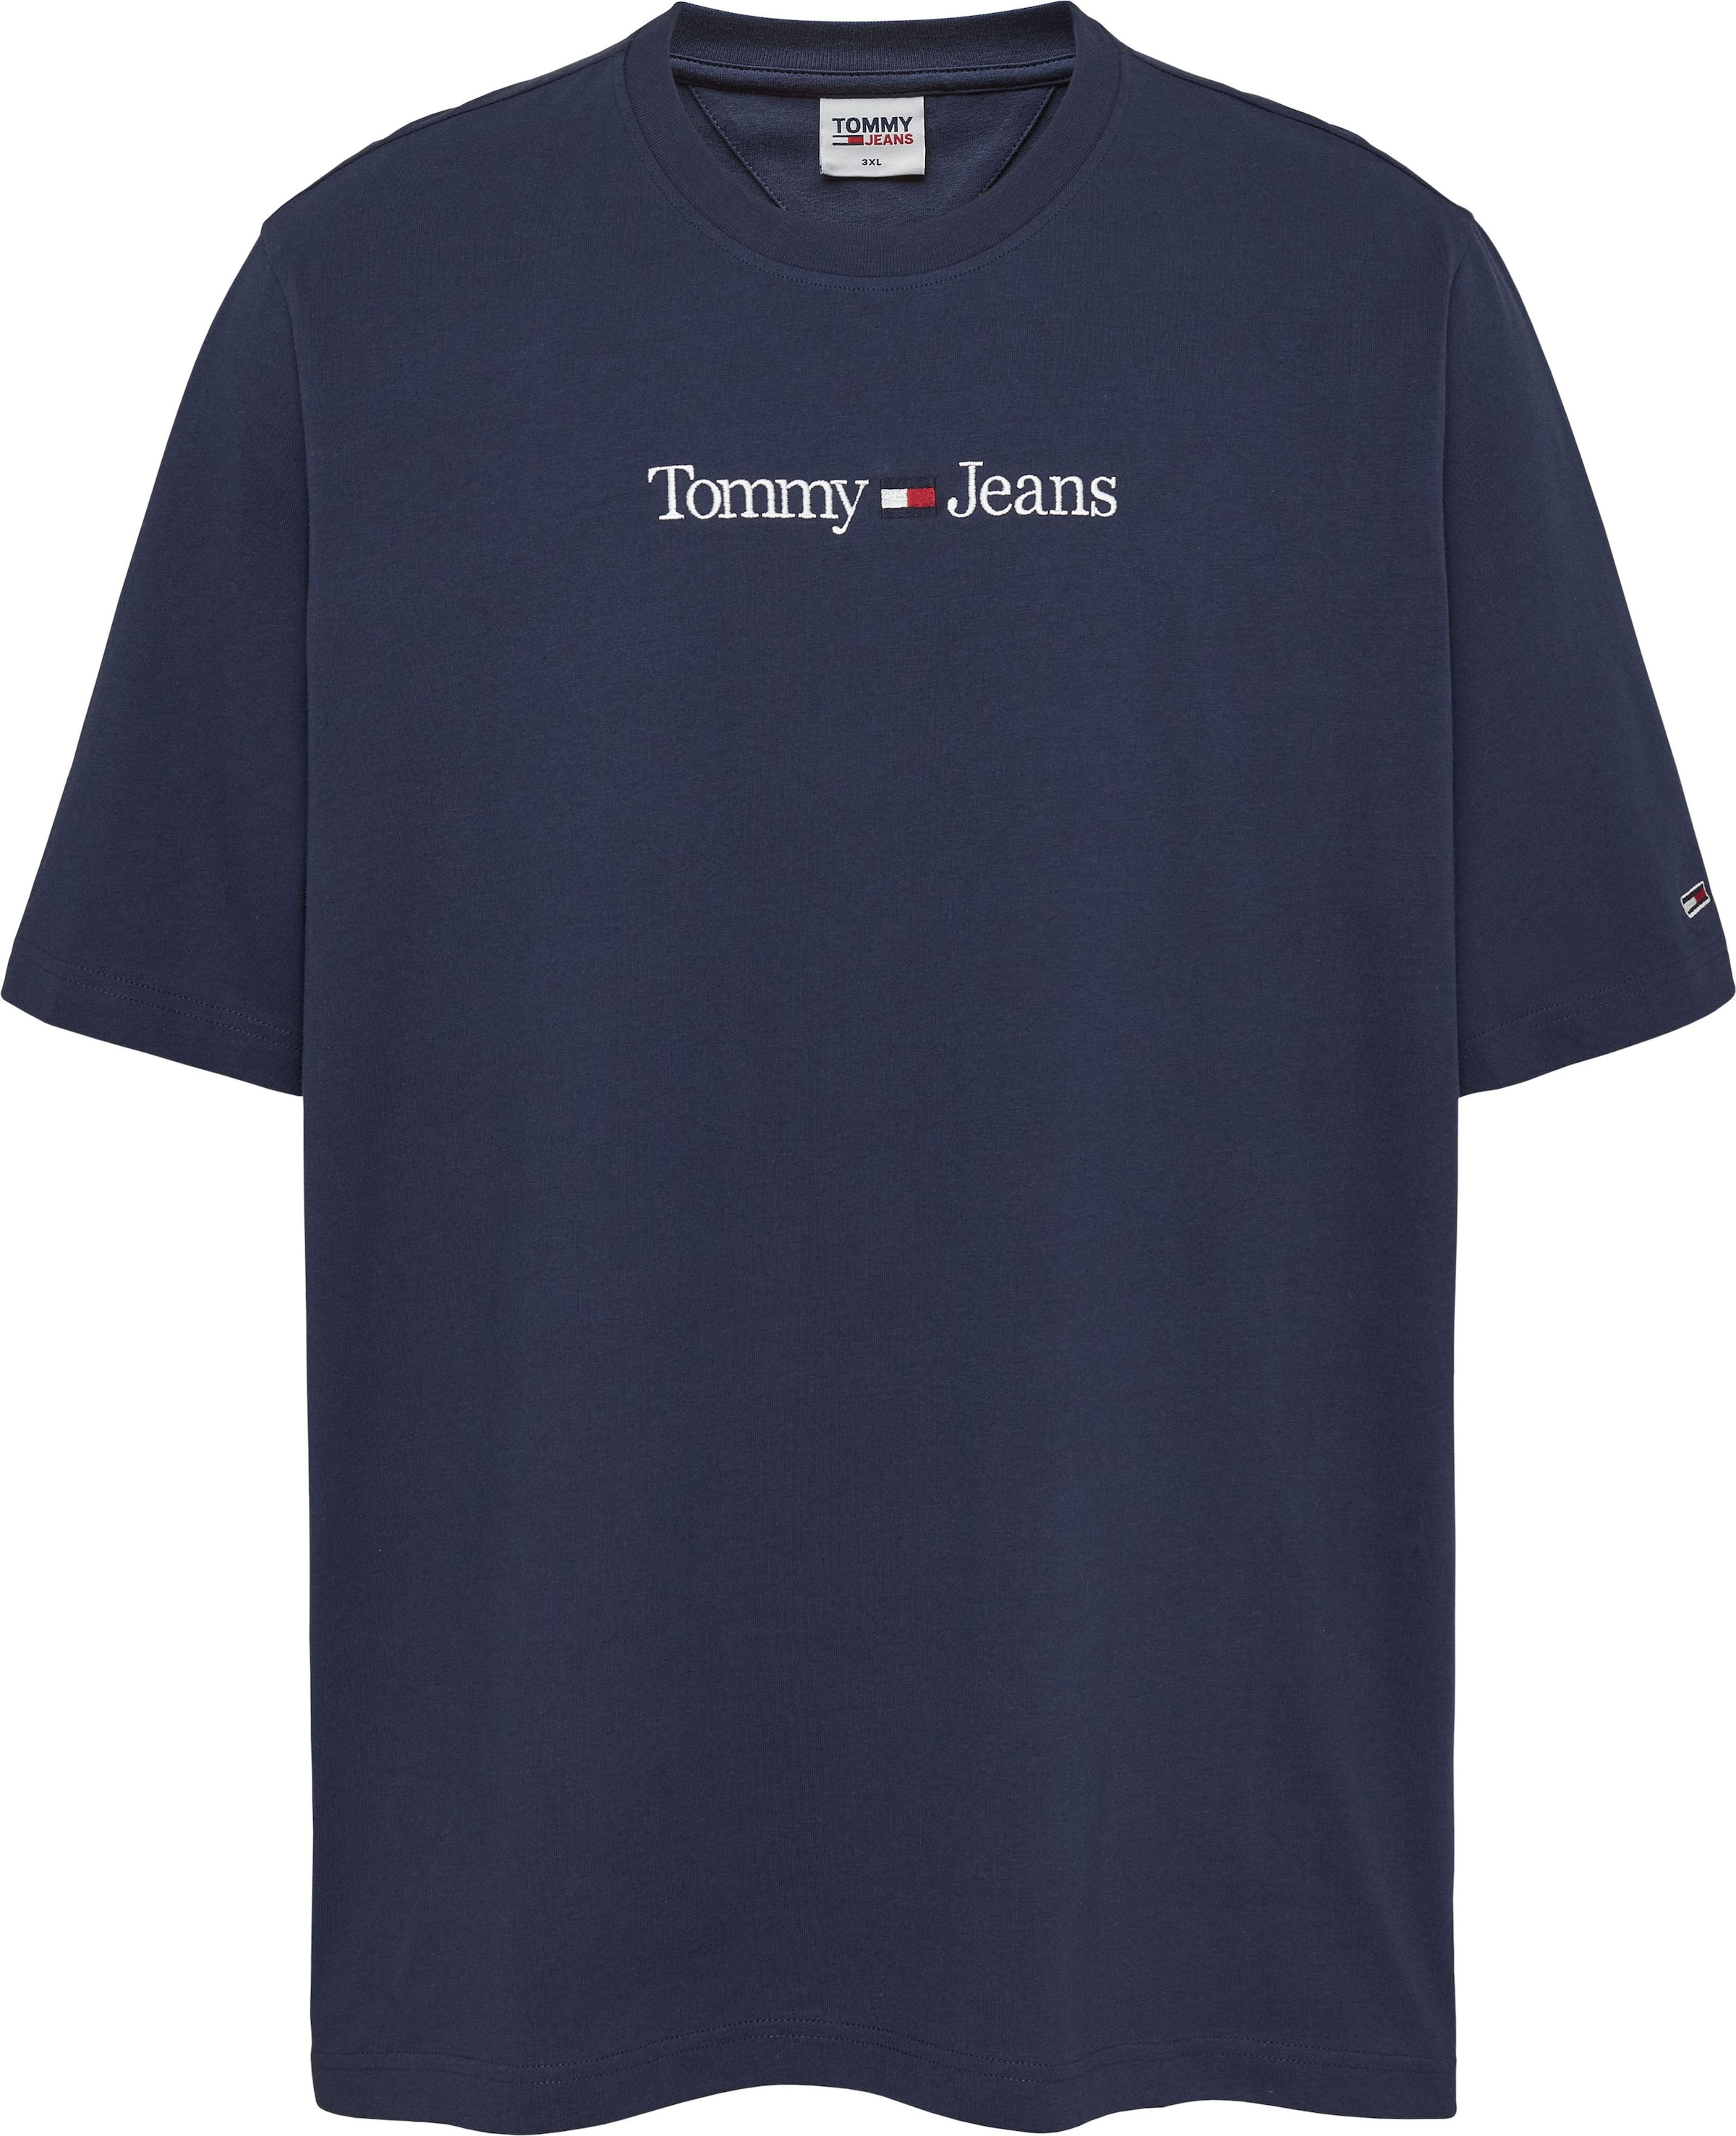 Tommy Jeans PLUS T-Shirt online der bei Plus LO«, LINEAR mit Tommy-Jeans Branding Brust auf »TJM